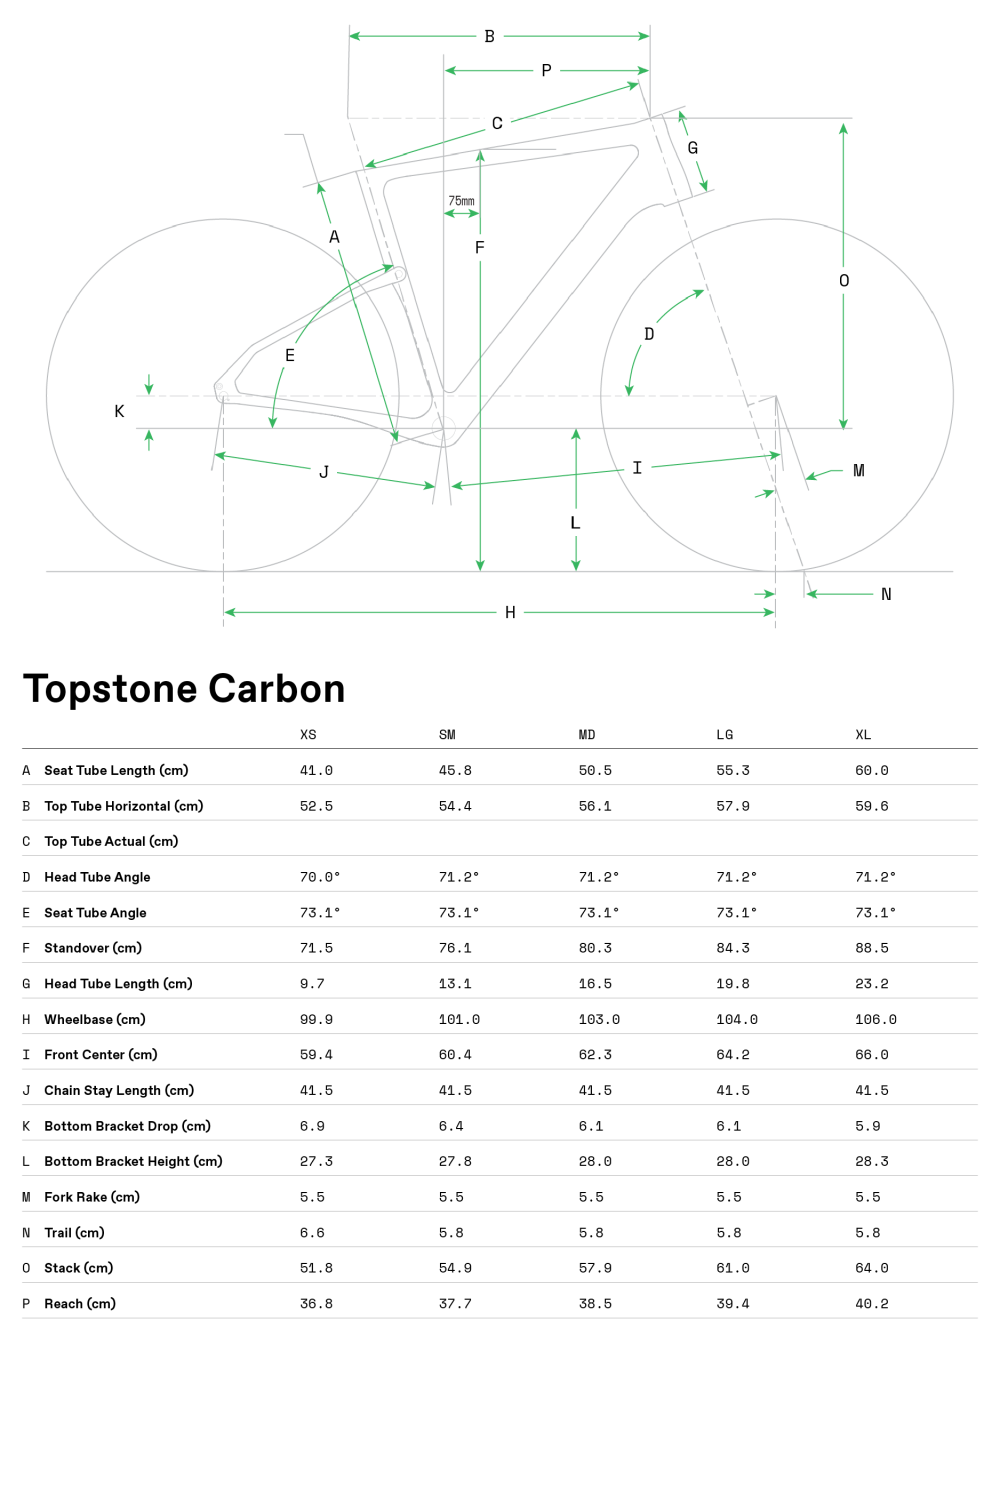 Topstone Carbon 6 - 